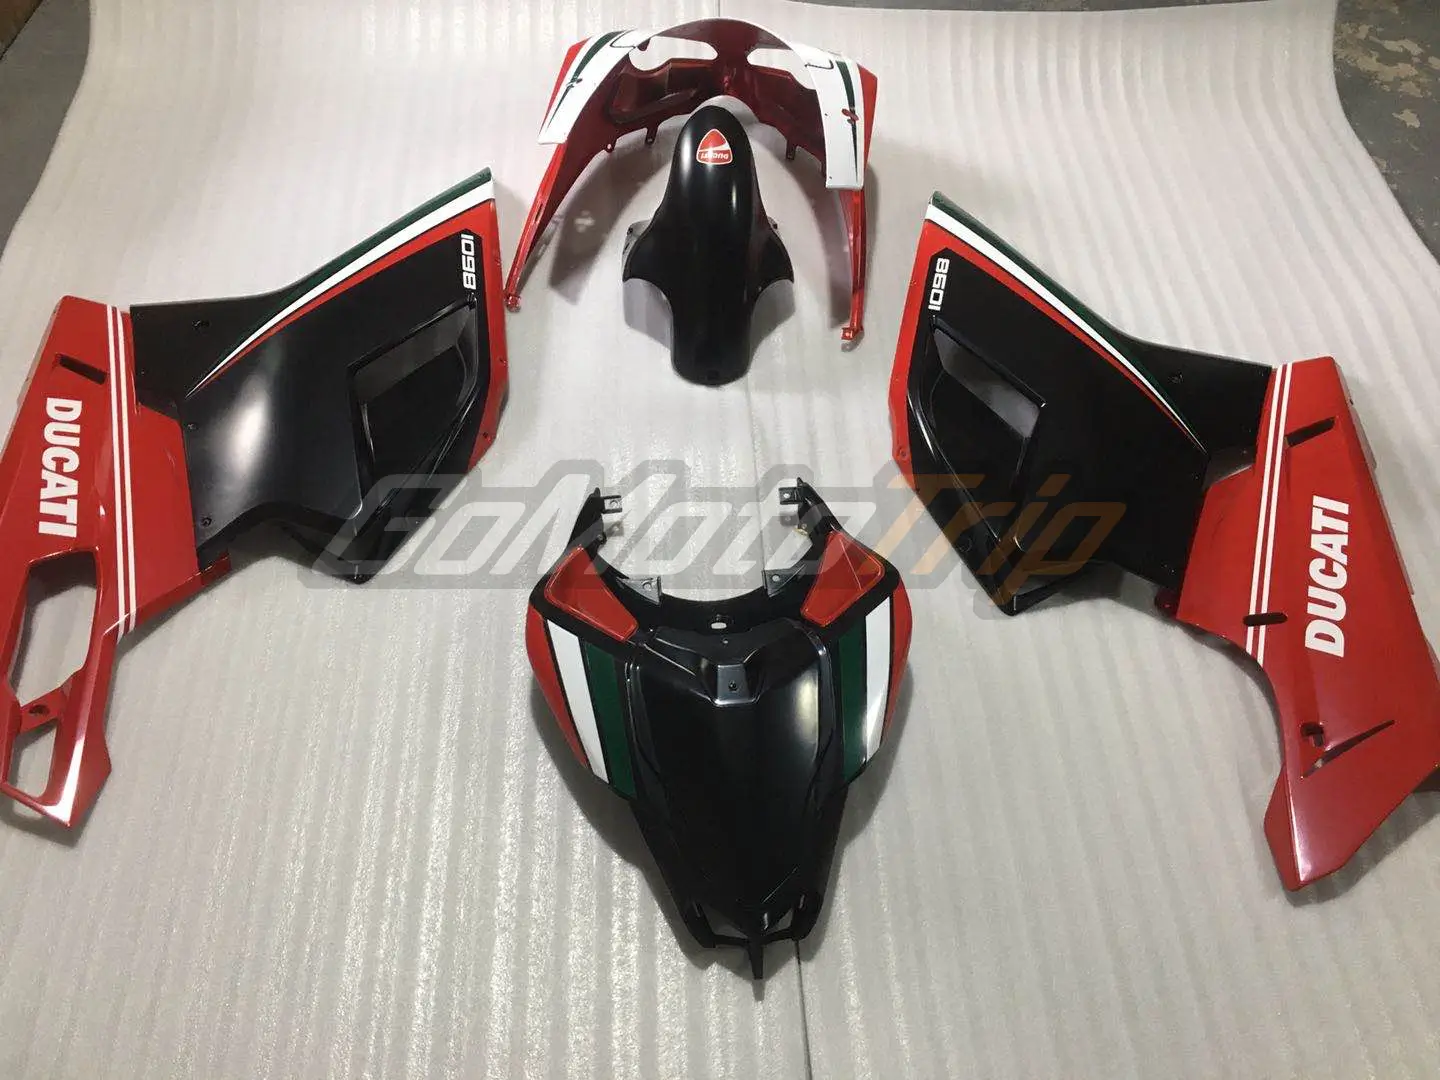 Rider-Review-93849-Ducati-848-Fairing-3